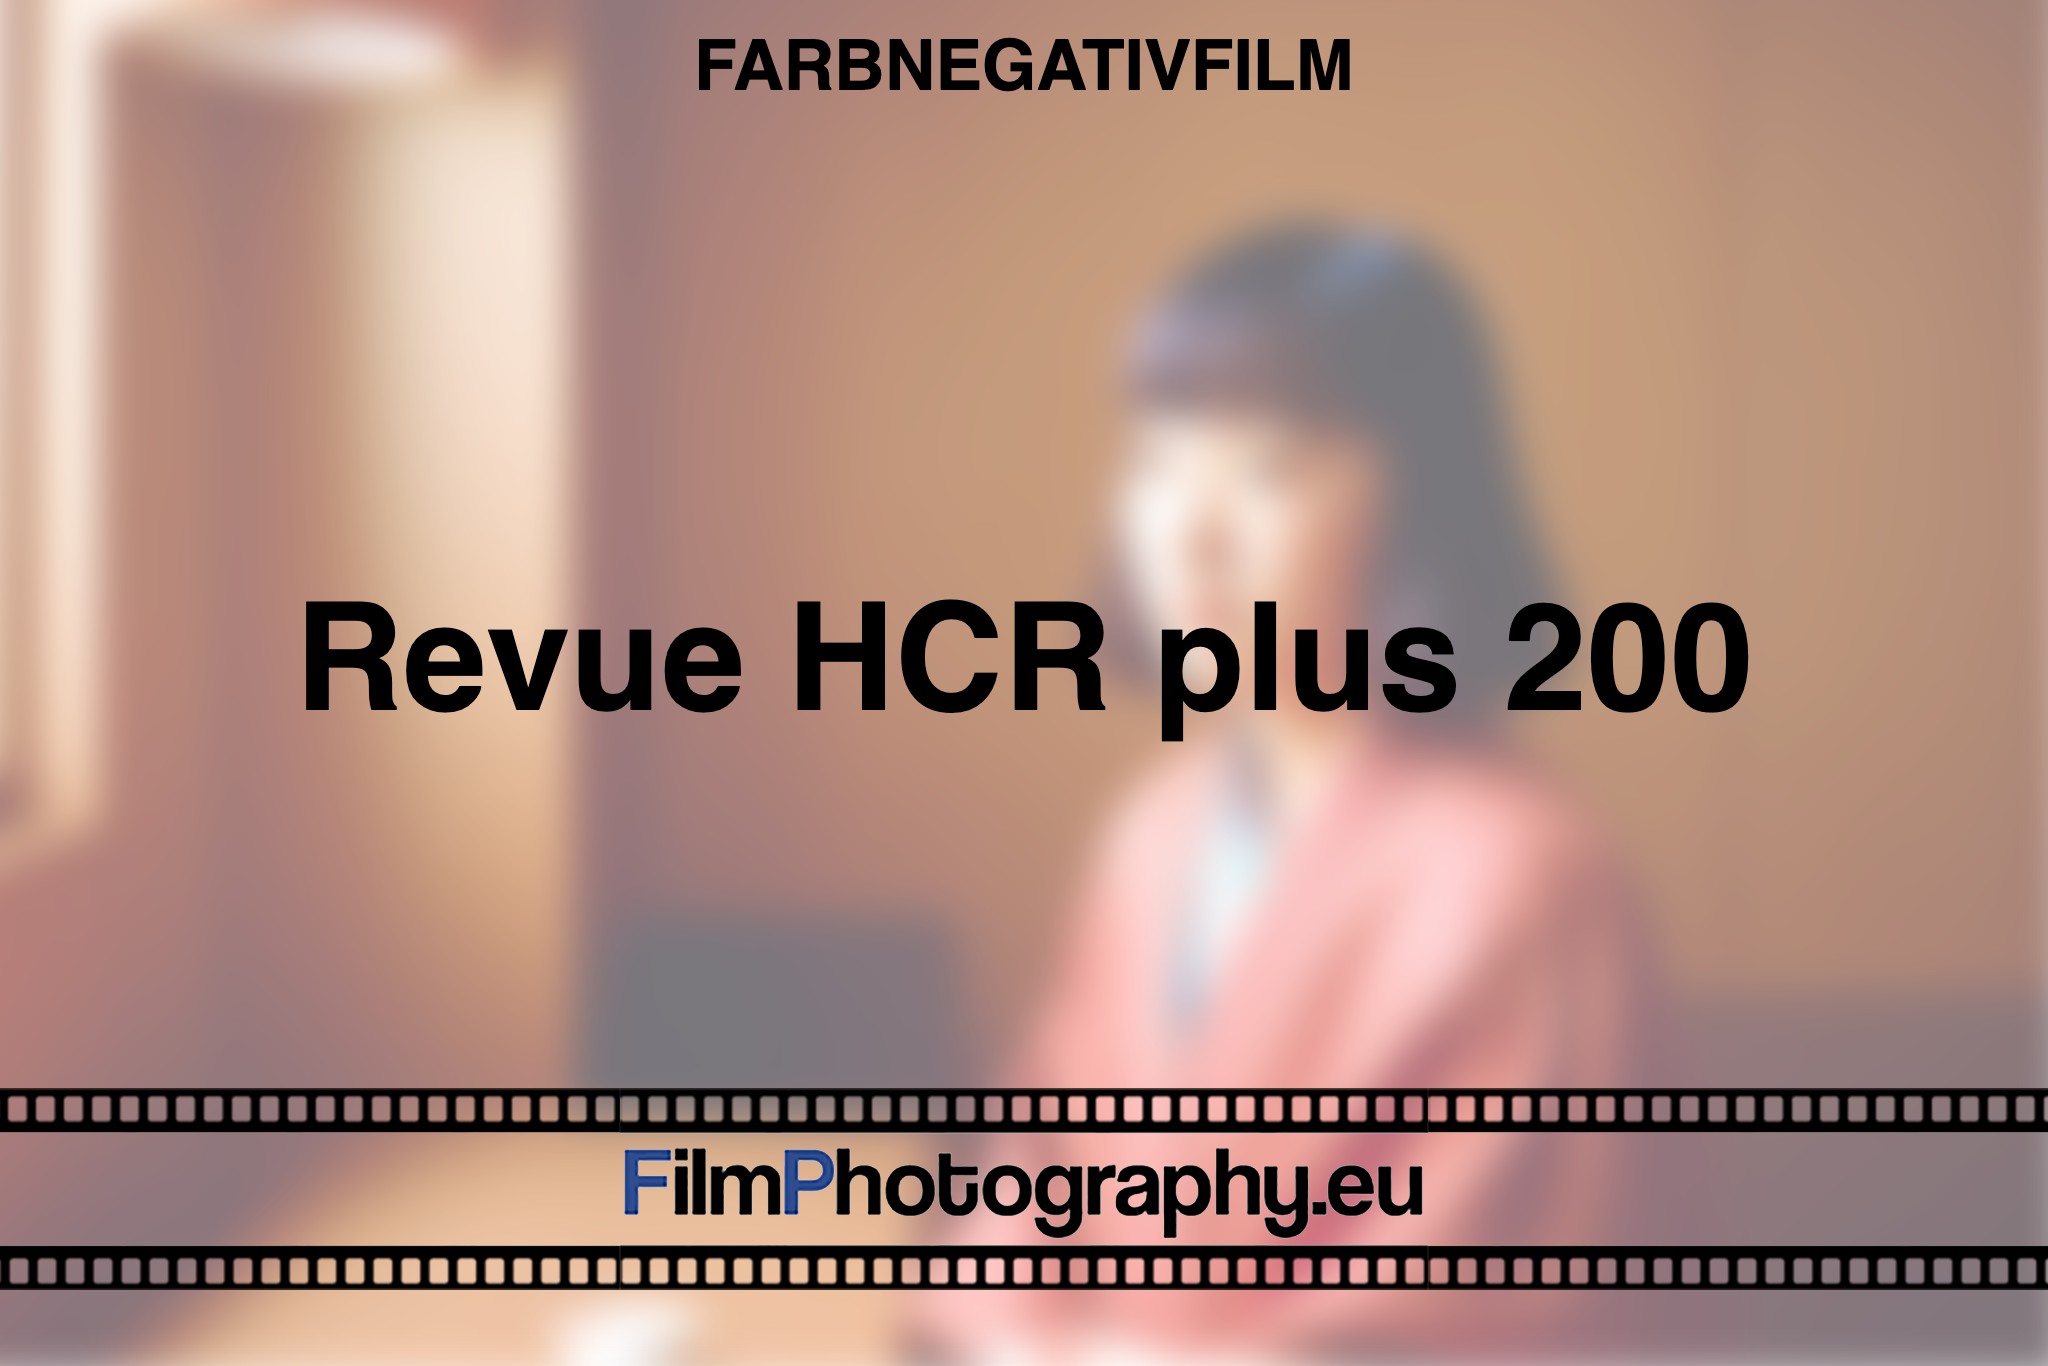 revue-hcr-plus-200-farbnegativfilm-bnv